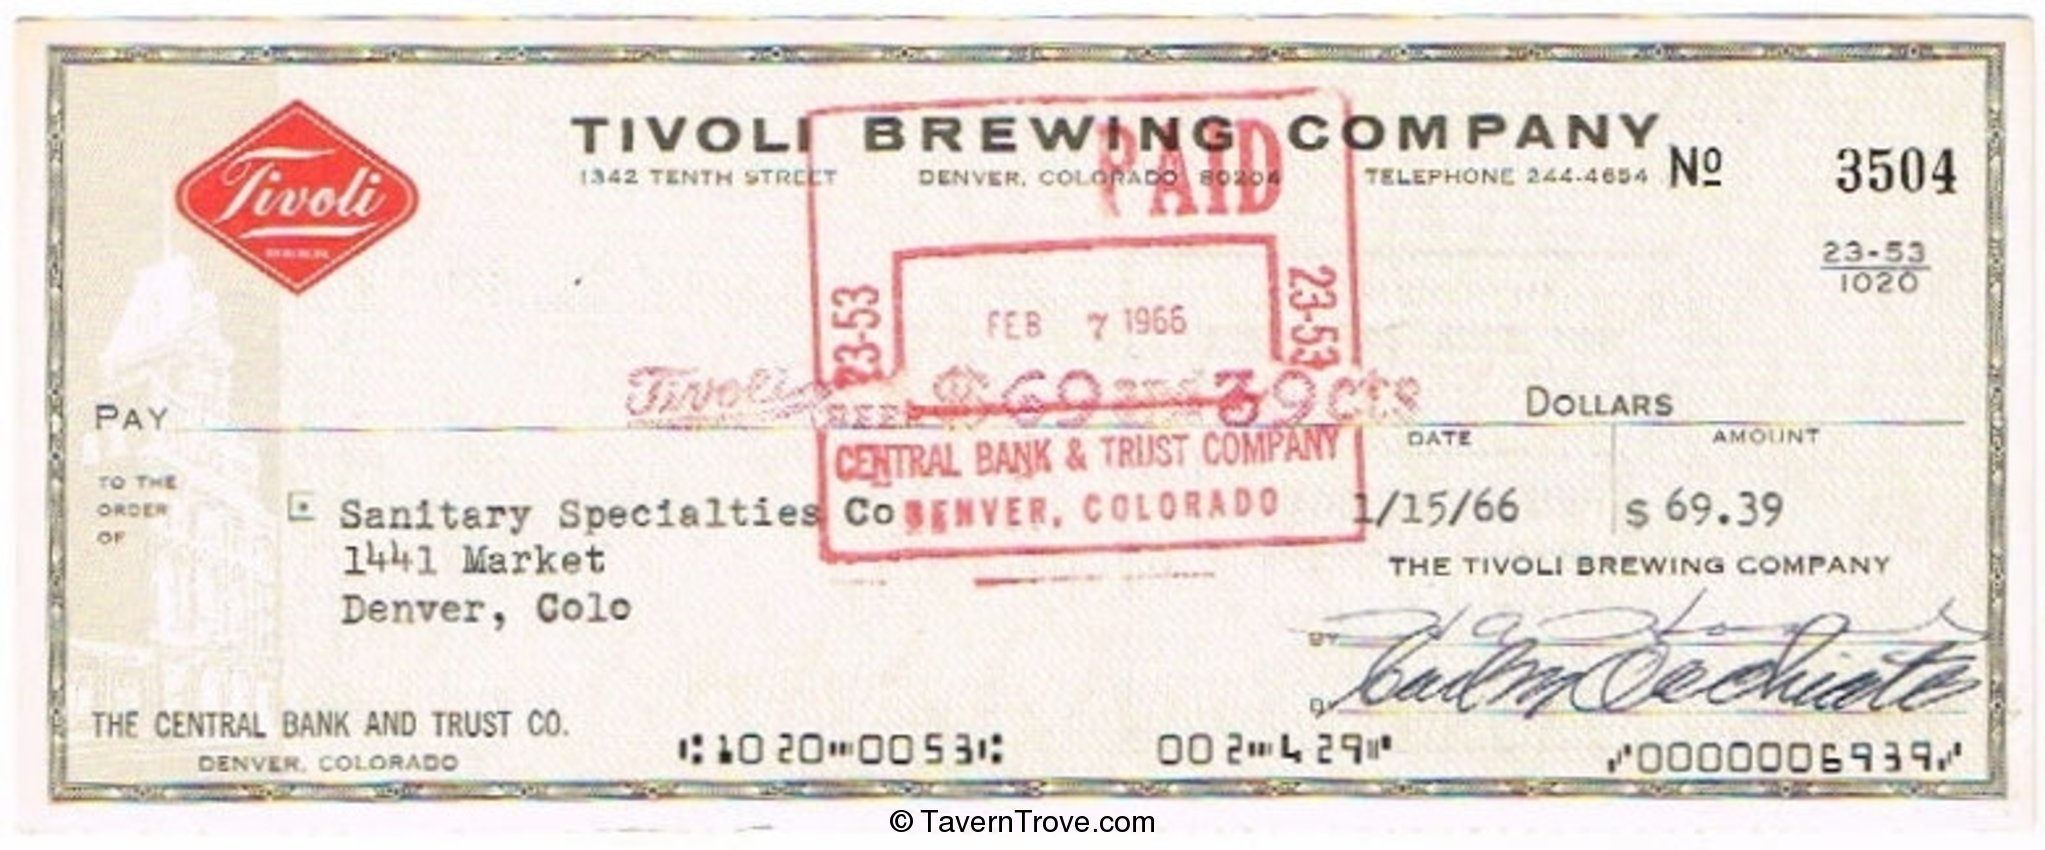 Tivoli Brewing Co.